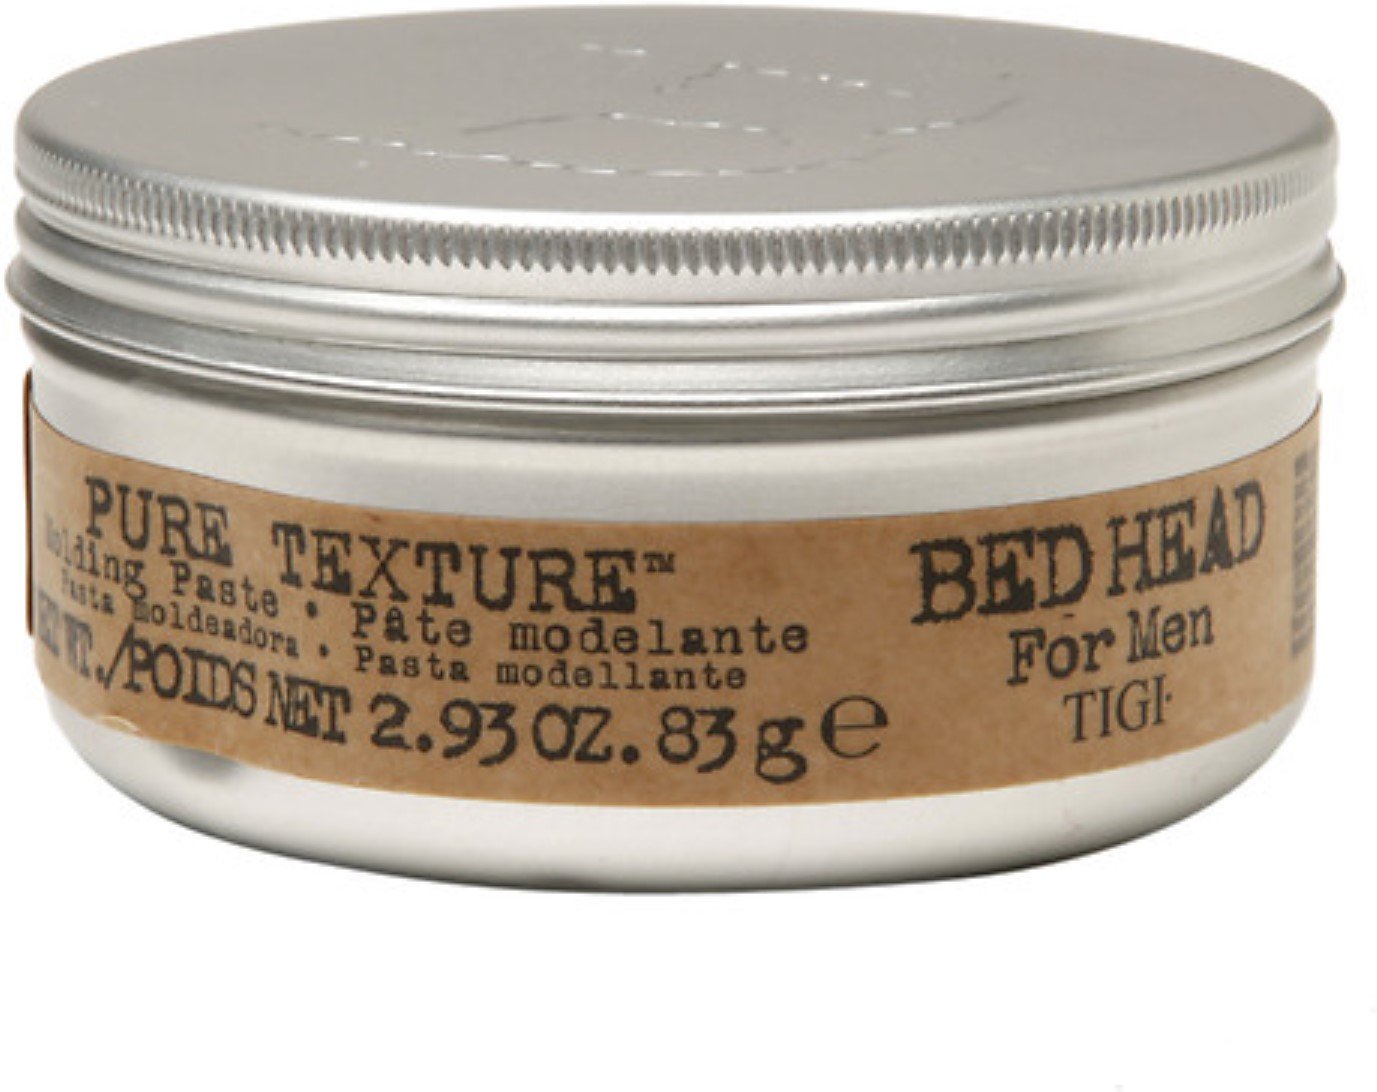 TIGI Bed Head for Men Pure Texture Molding Paste, 2.93 oz (Pack of 8)